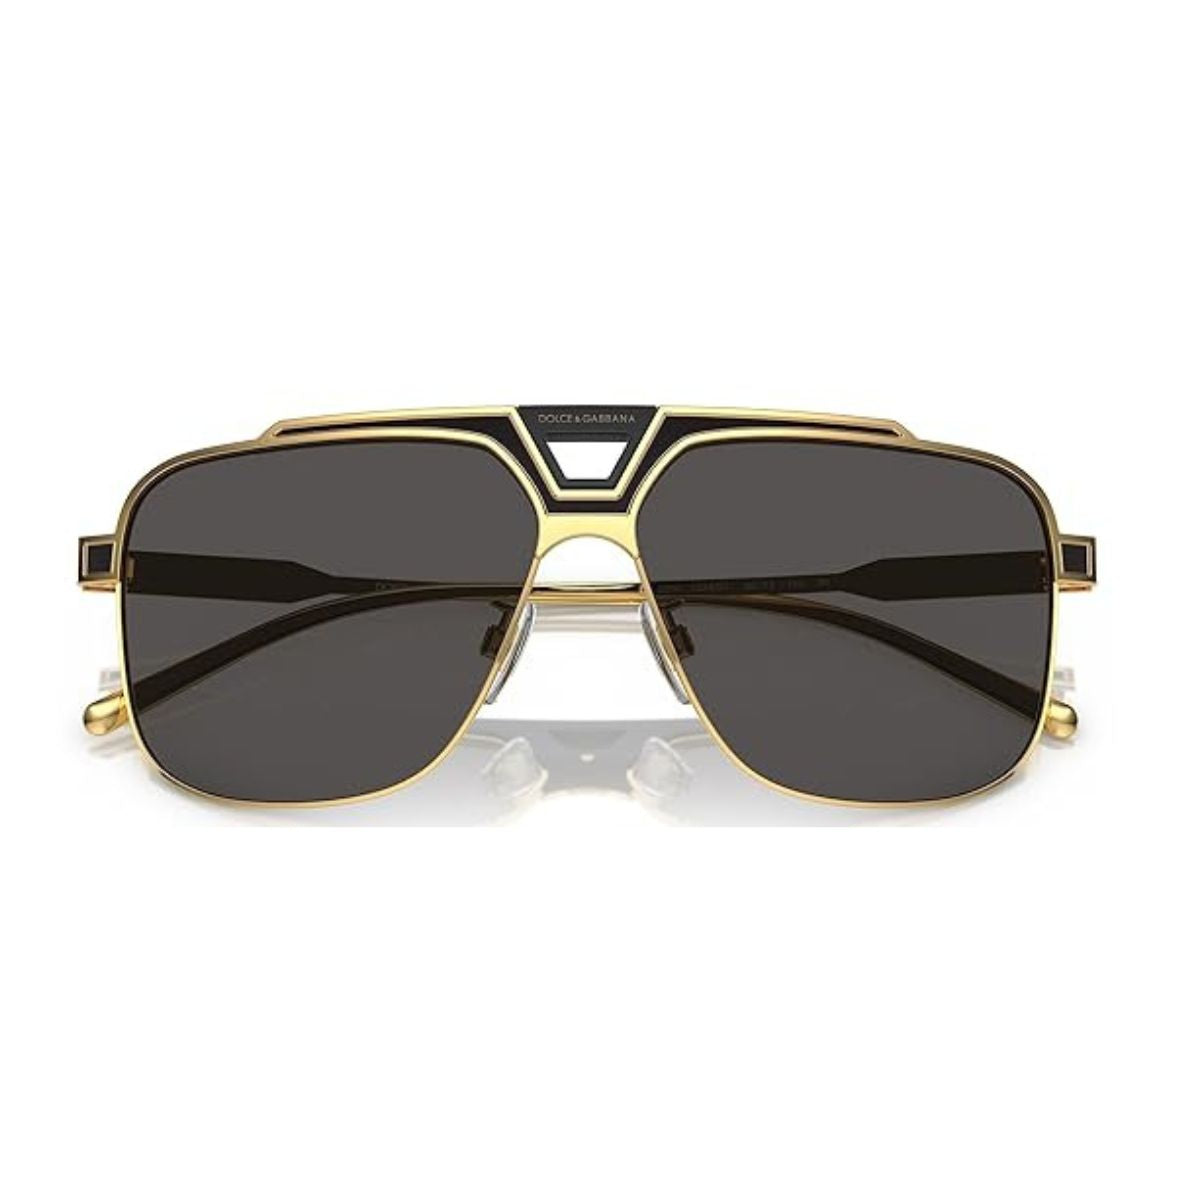 "Stylish Dolce & Gabbana DG 2256 1334/87 Gold Color Sunglass For Men's At Optorium"